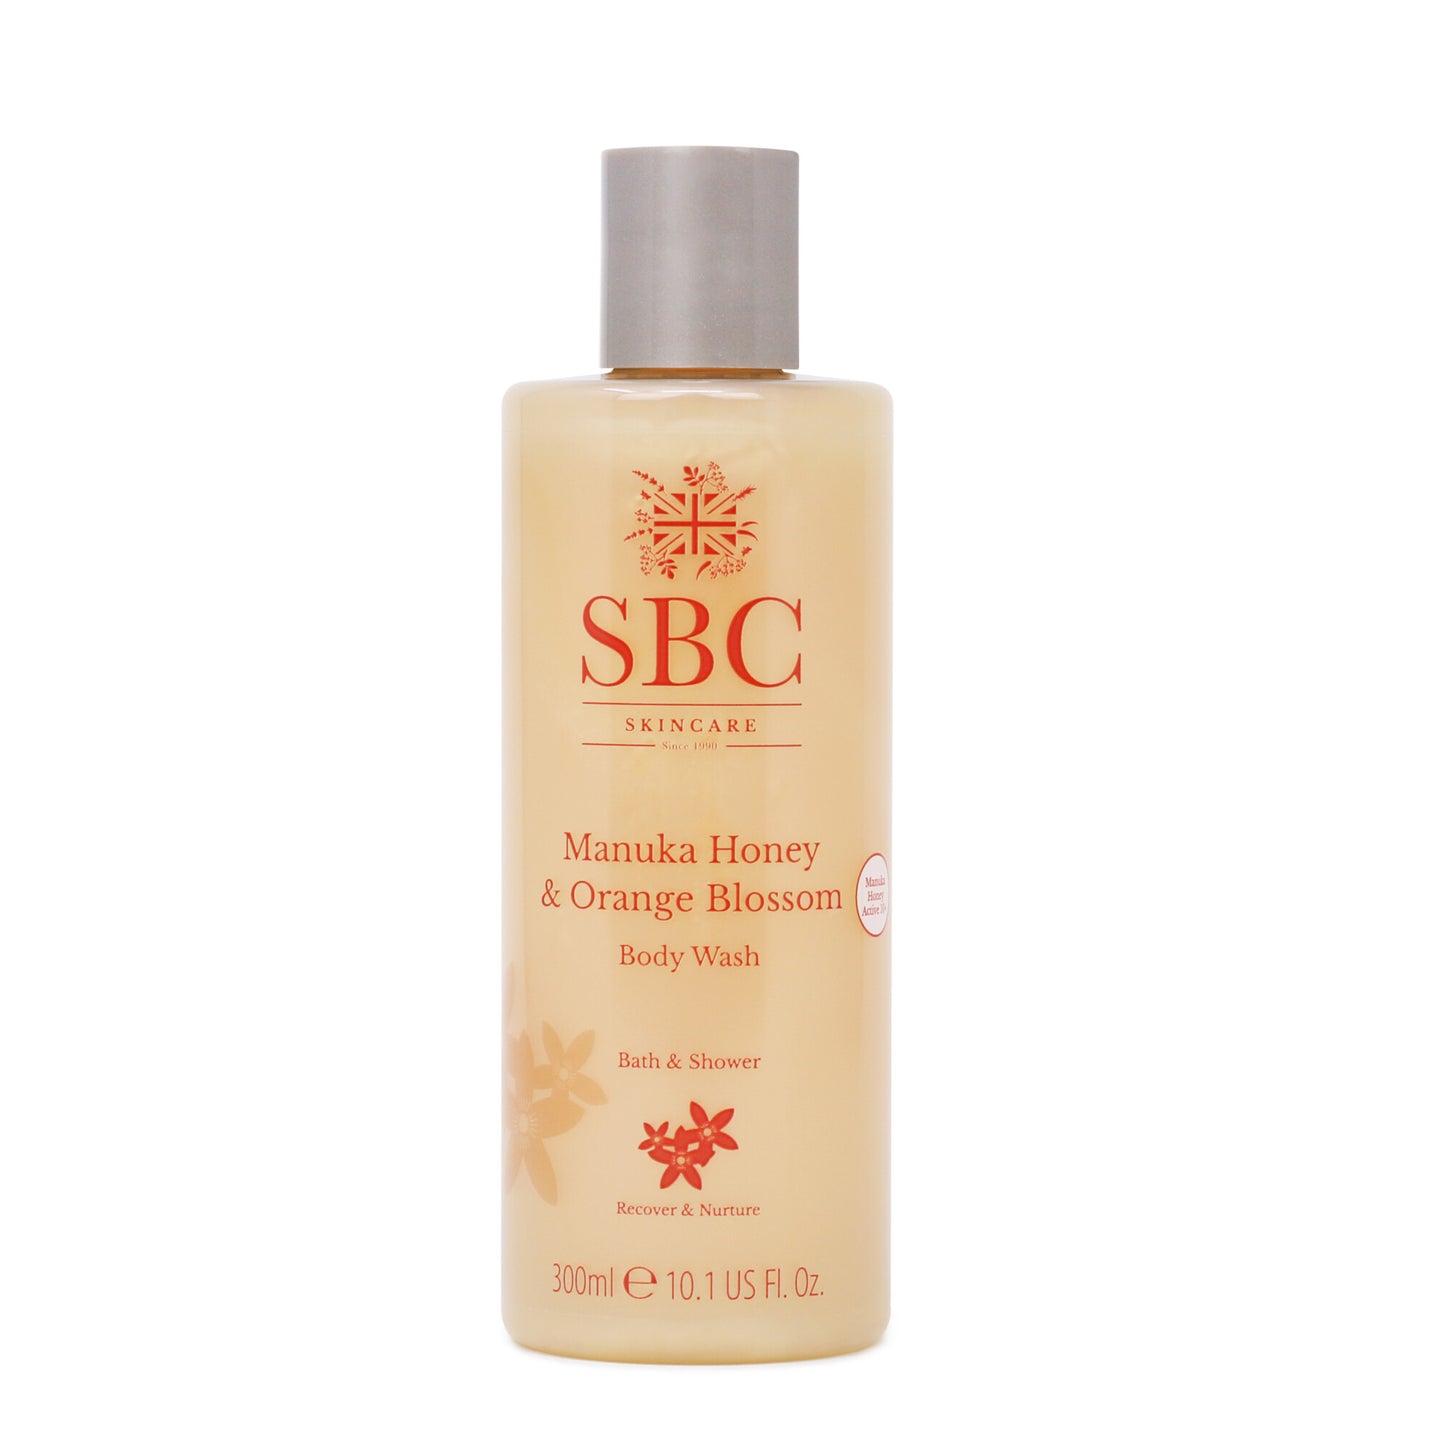 Manuka Honey & Orange Blossom Body Wash 300ml on a white background